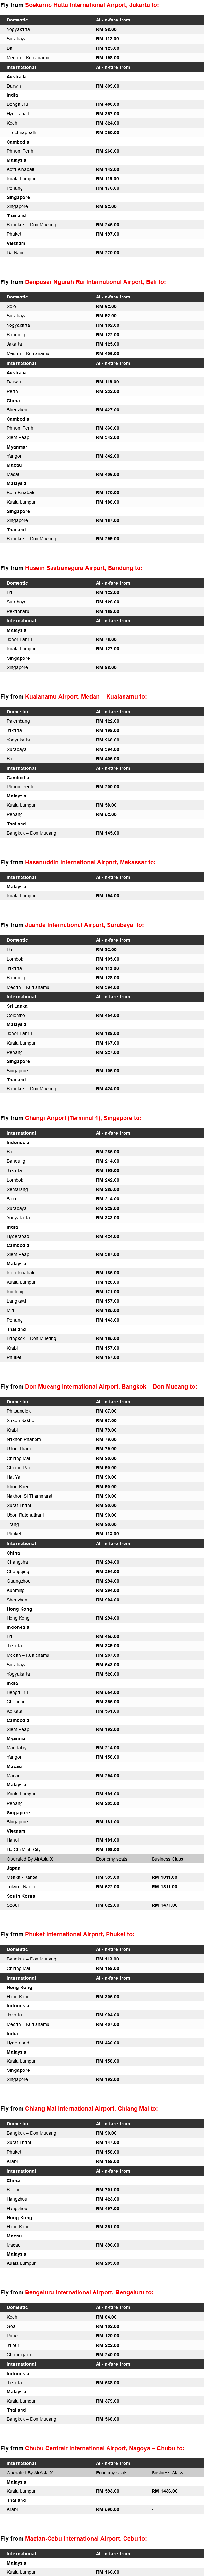 AirAsia Smashing Low Fares Promotion 2015 Details